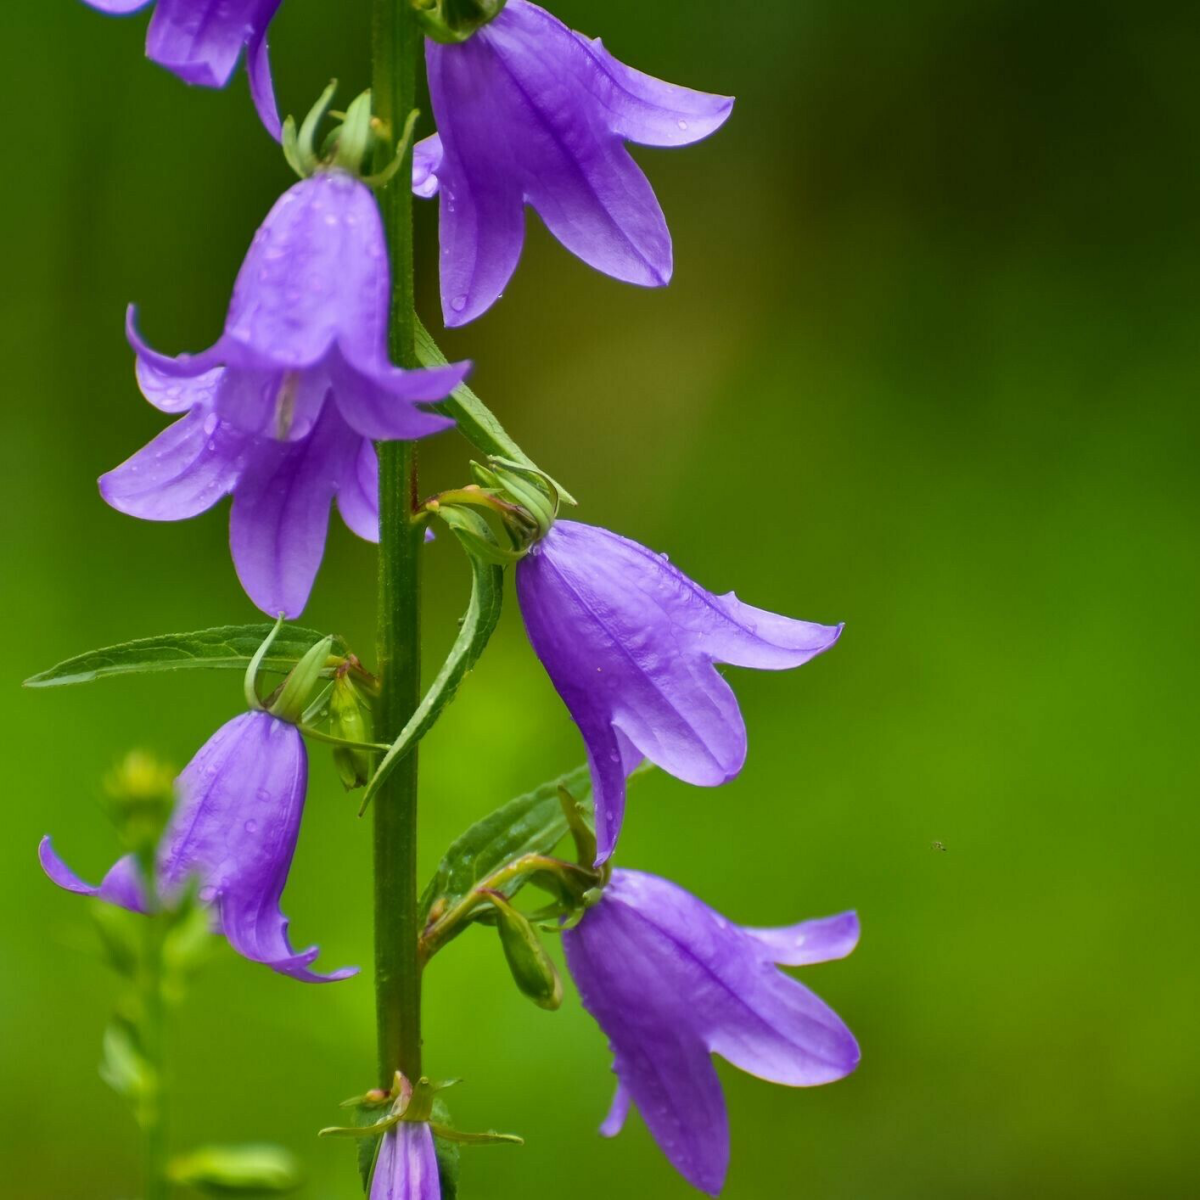 purple bellflower